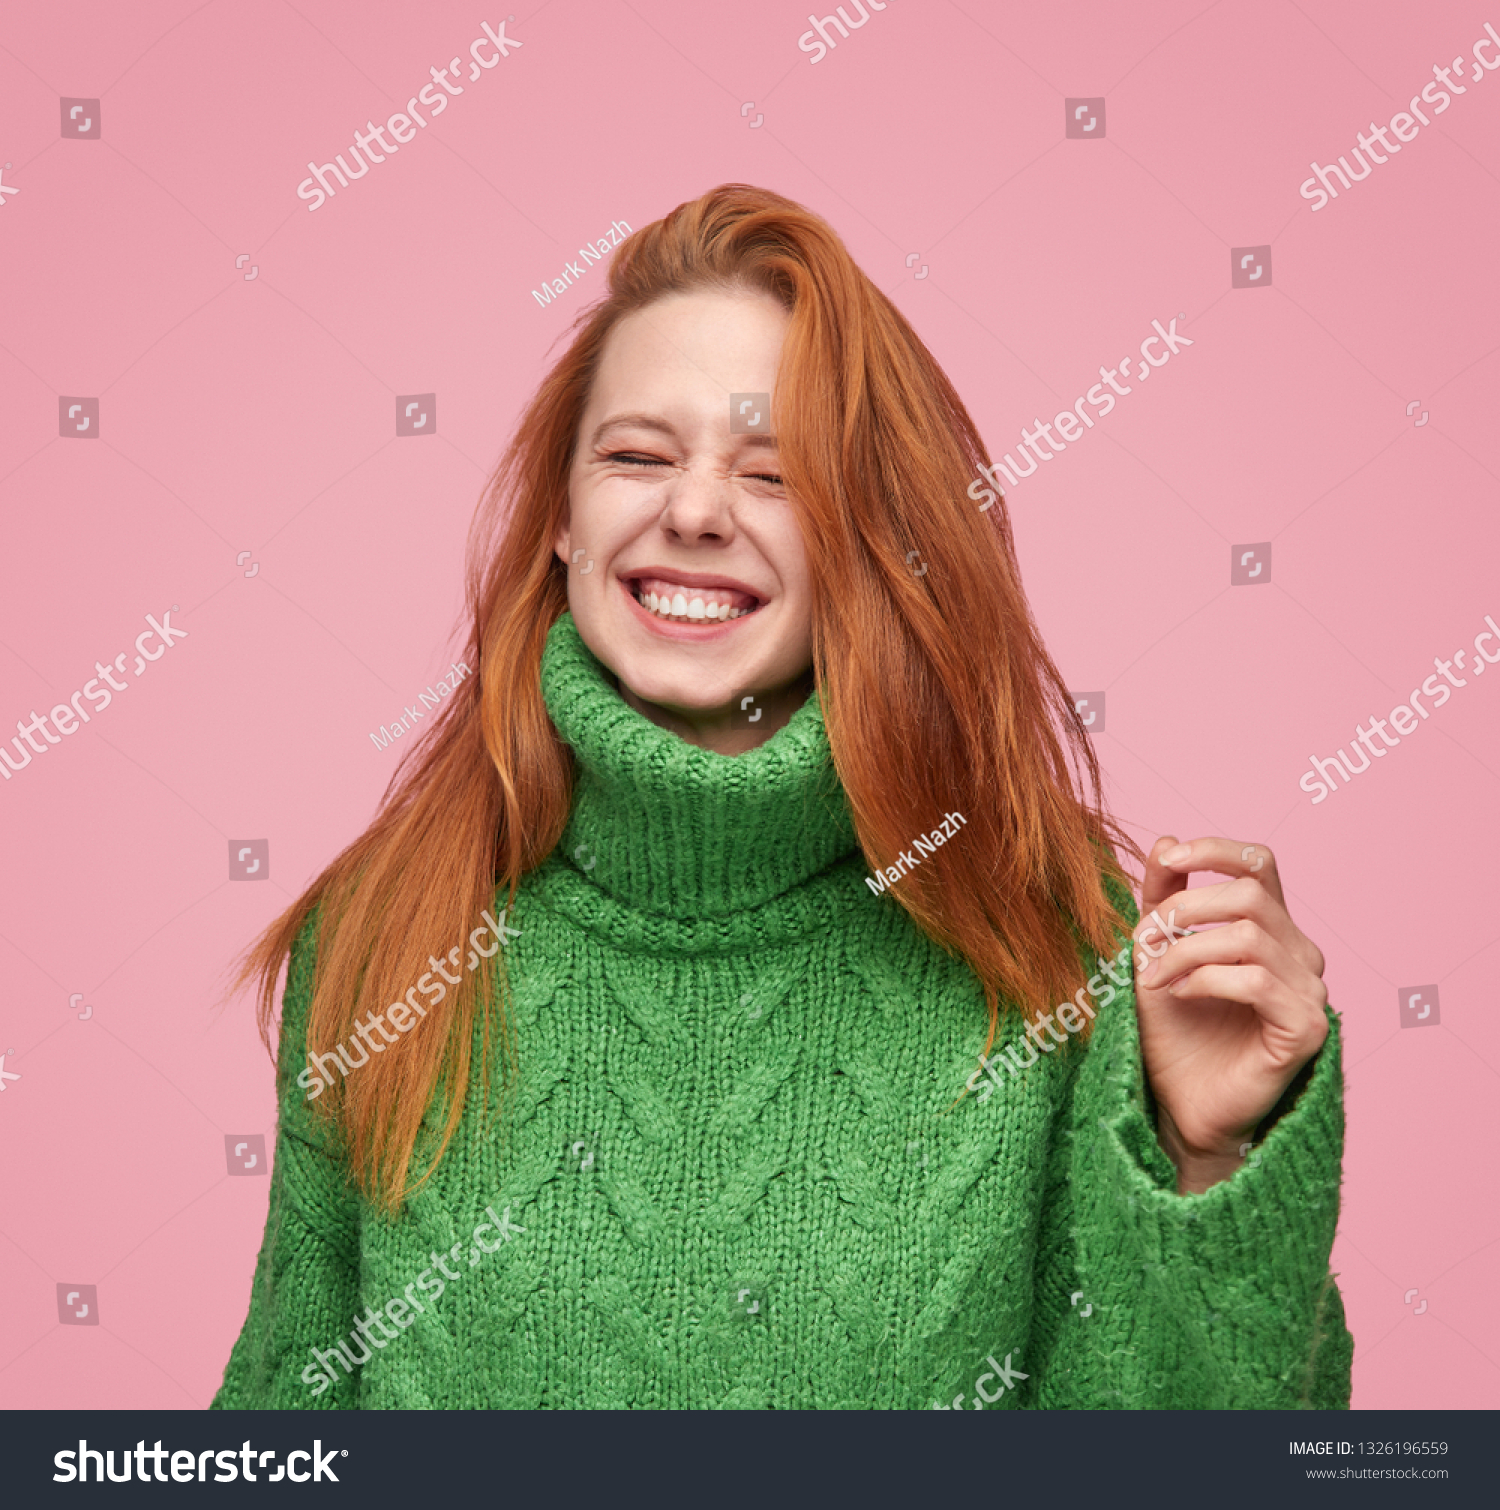 green sweater lady